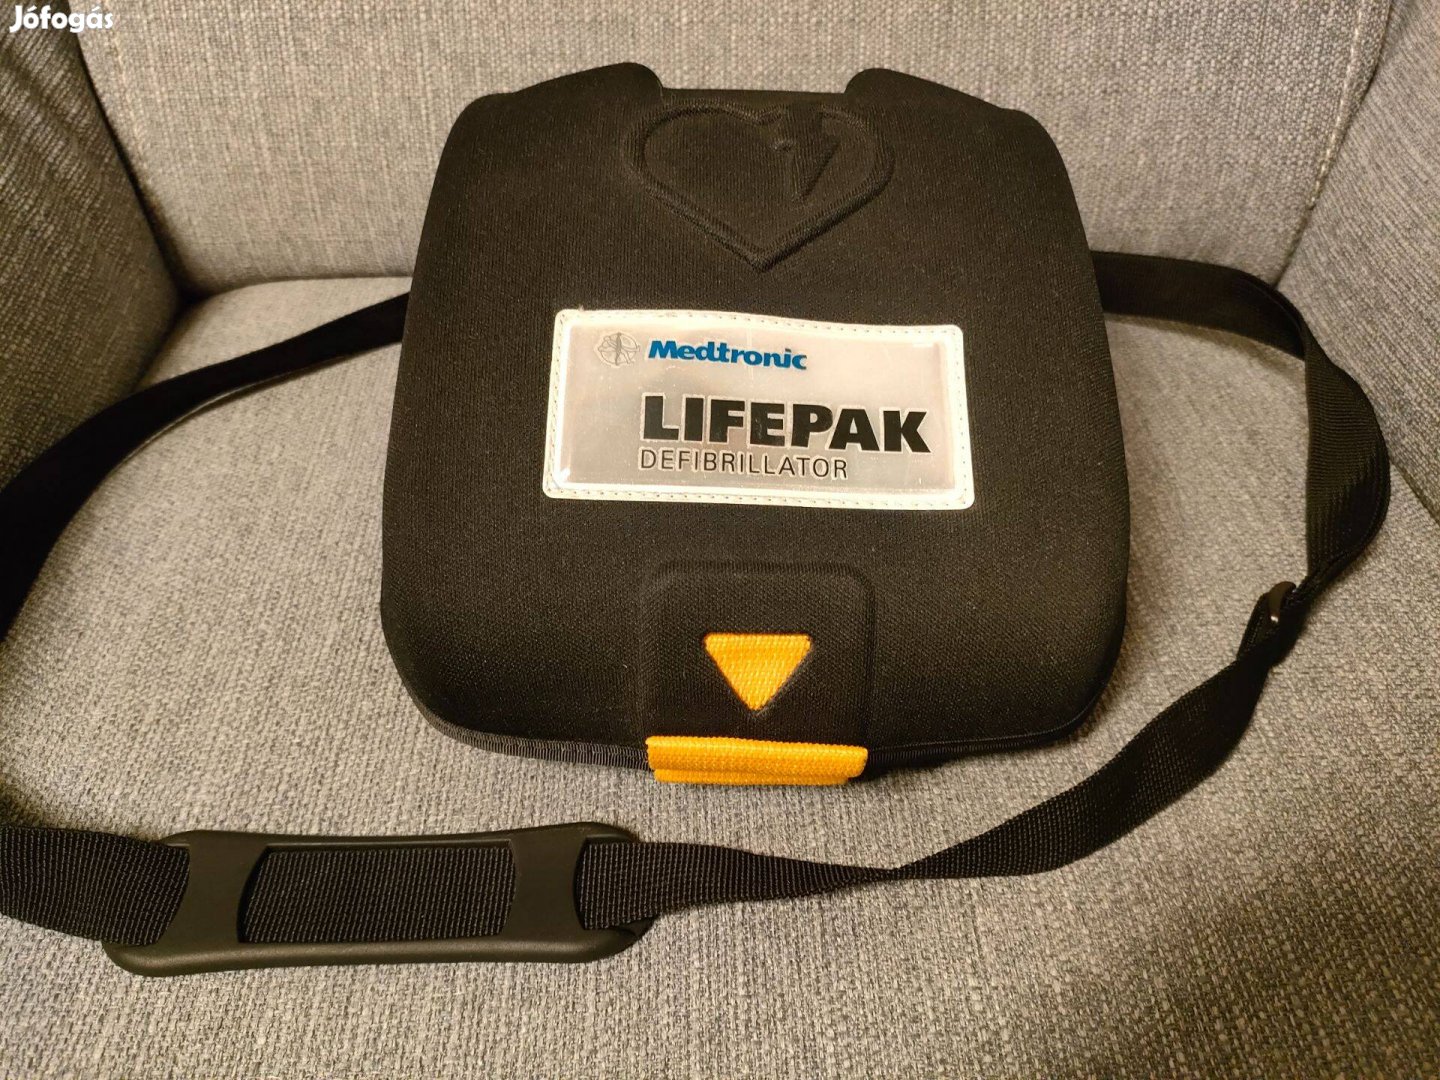 Lifepak CR Plus AED defibrillátor eladó